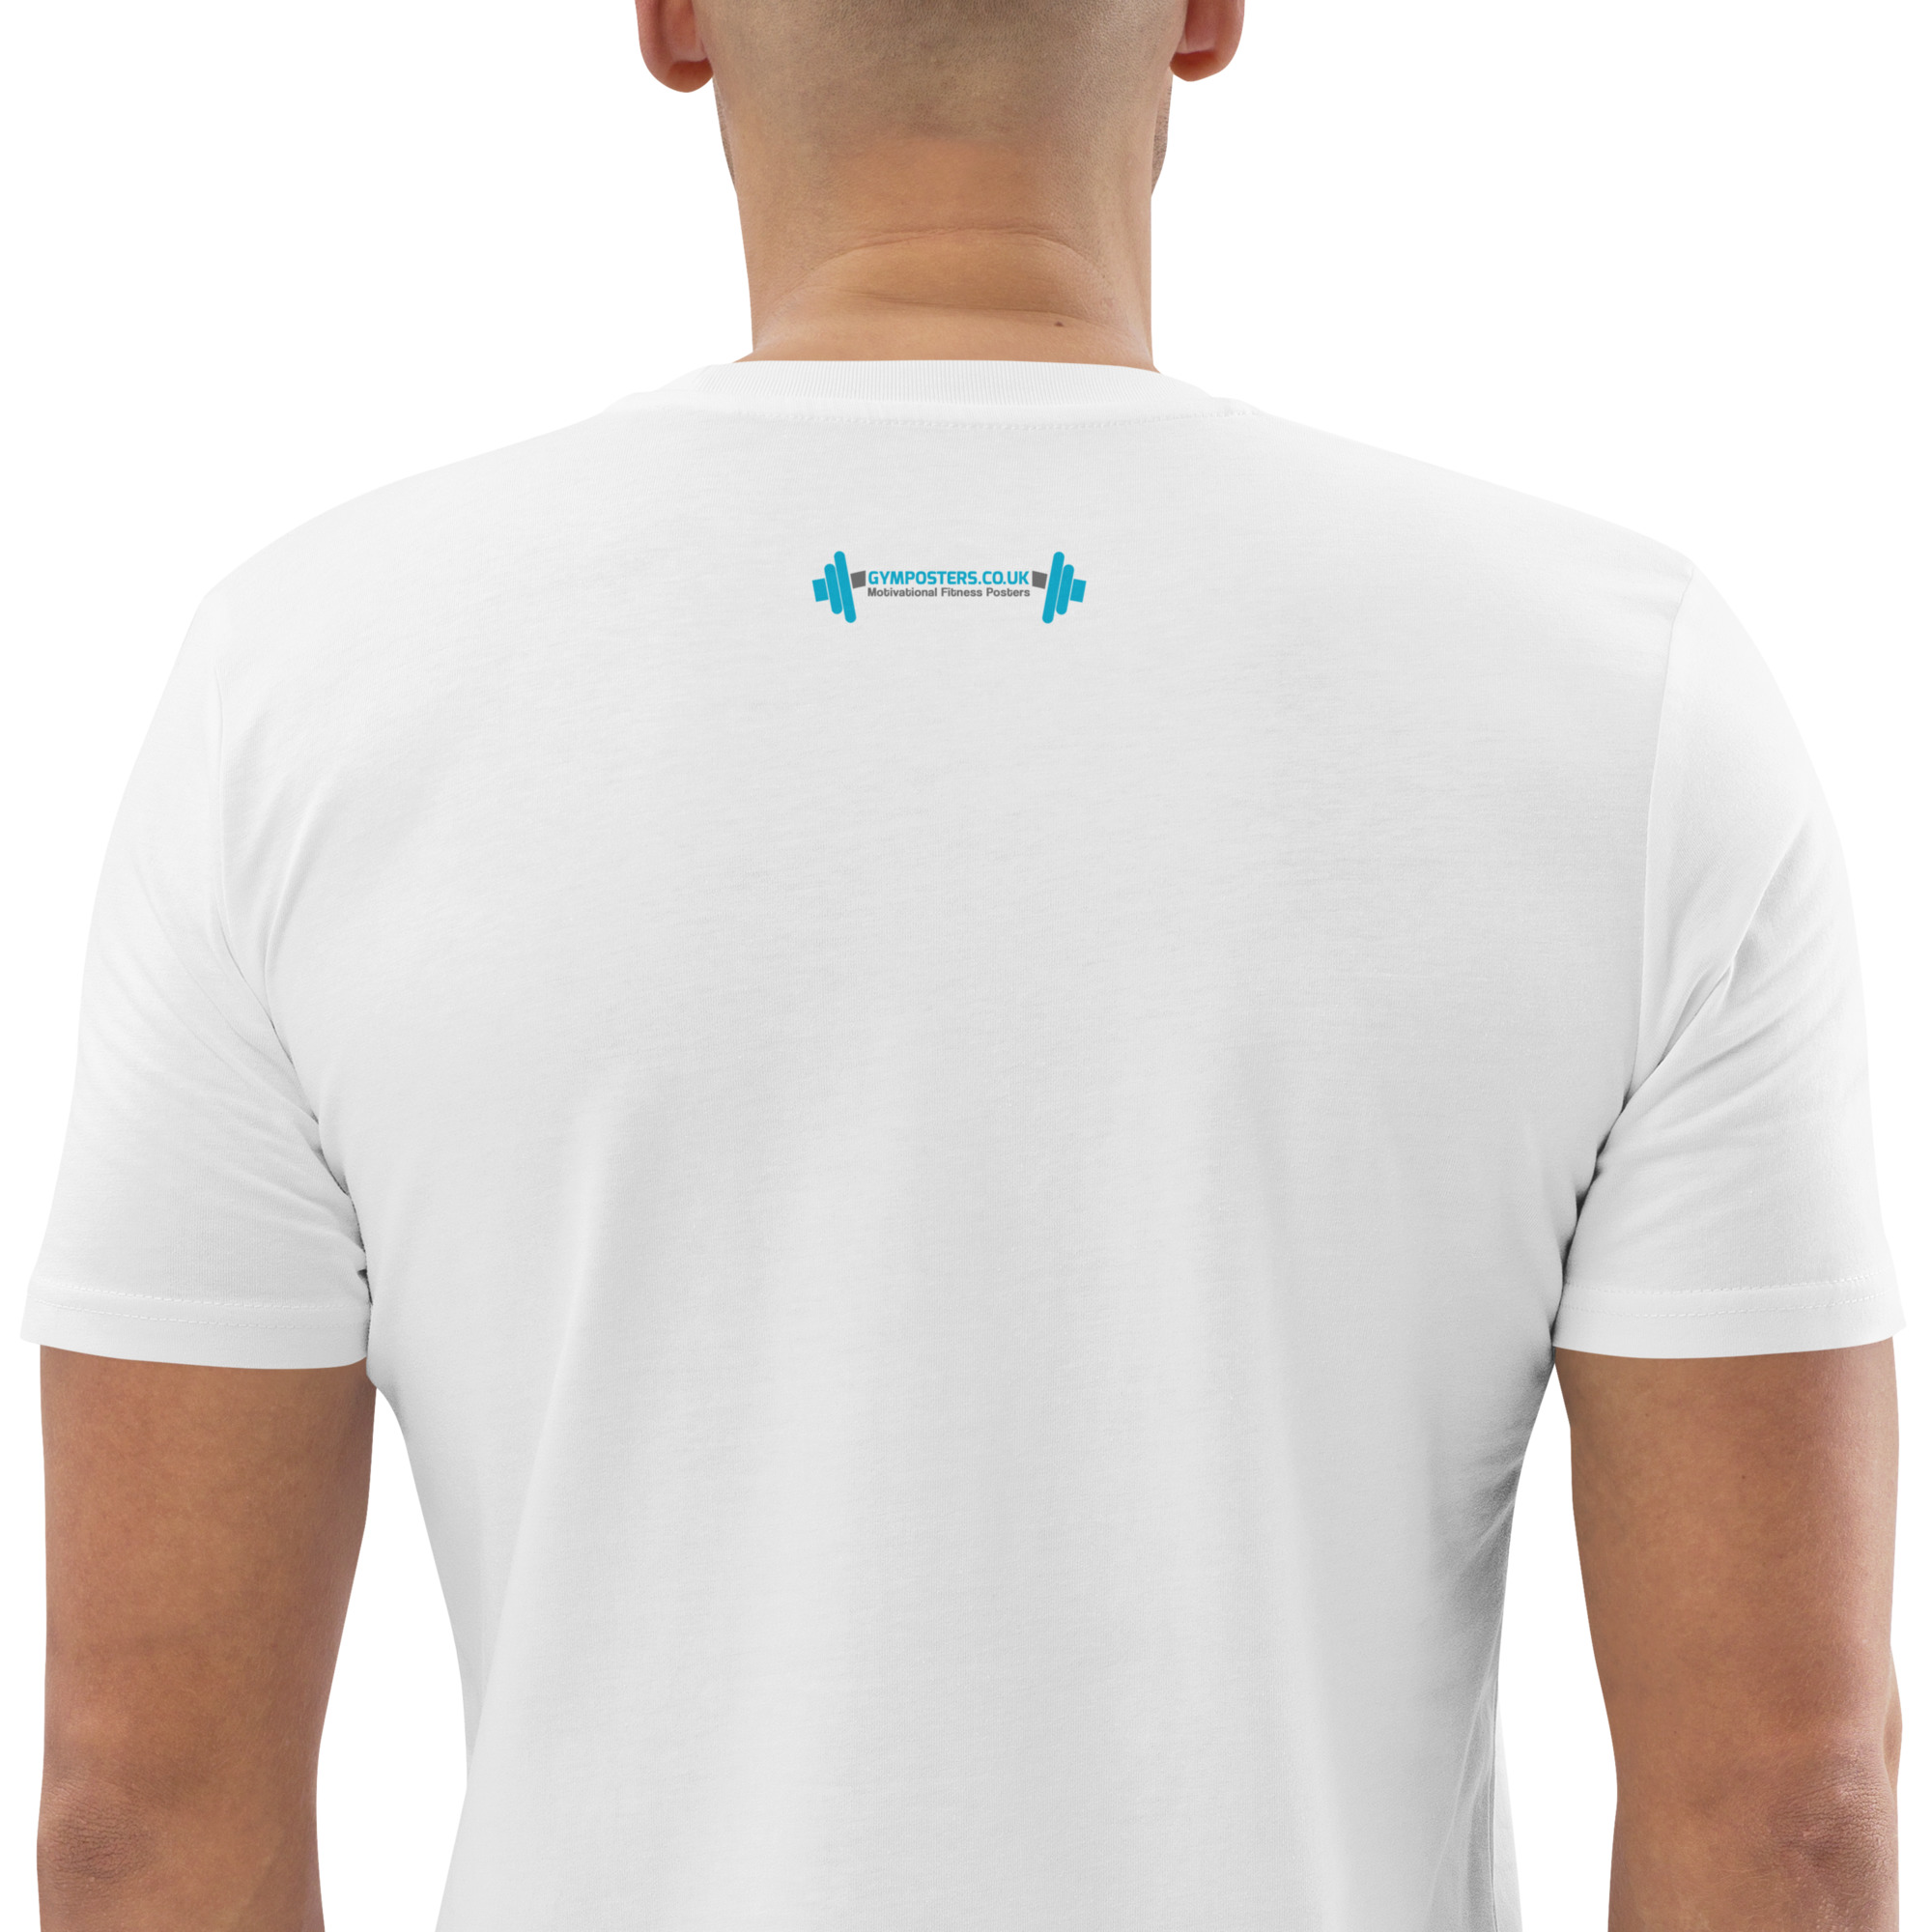 unisex-organic-cotton-t-shirt-white-zoomed-in-2-65784ee5e118c.jpg